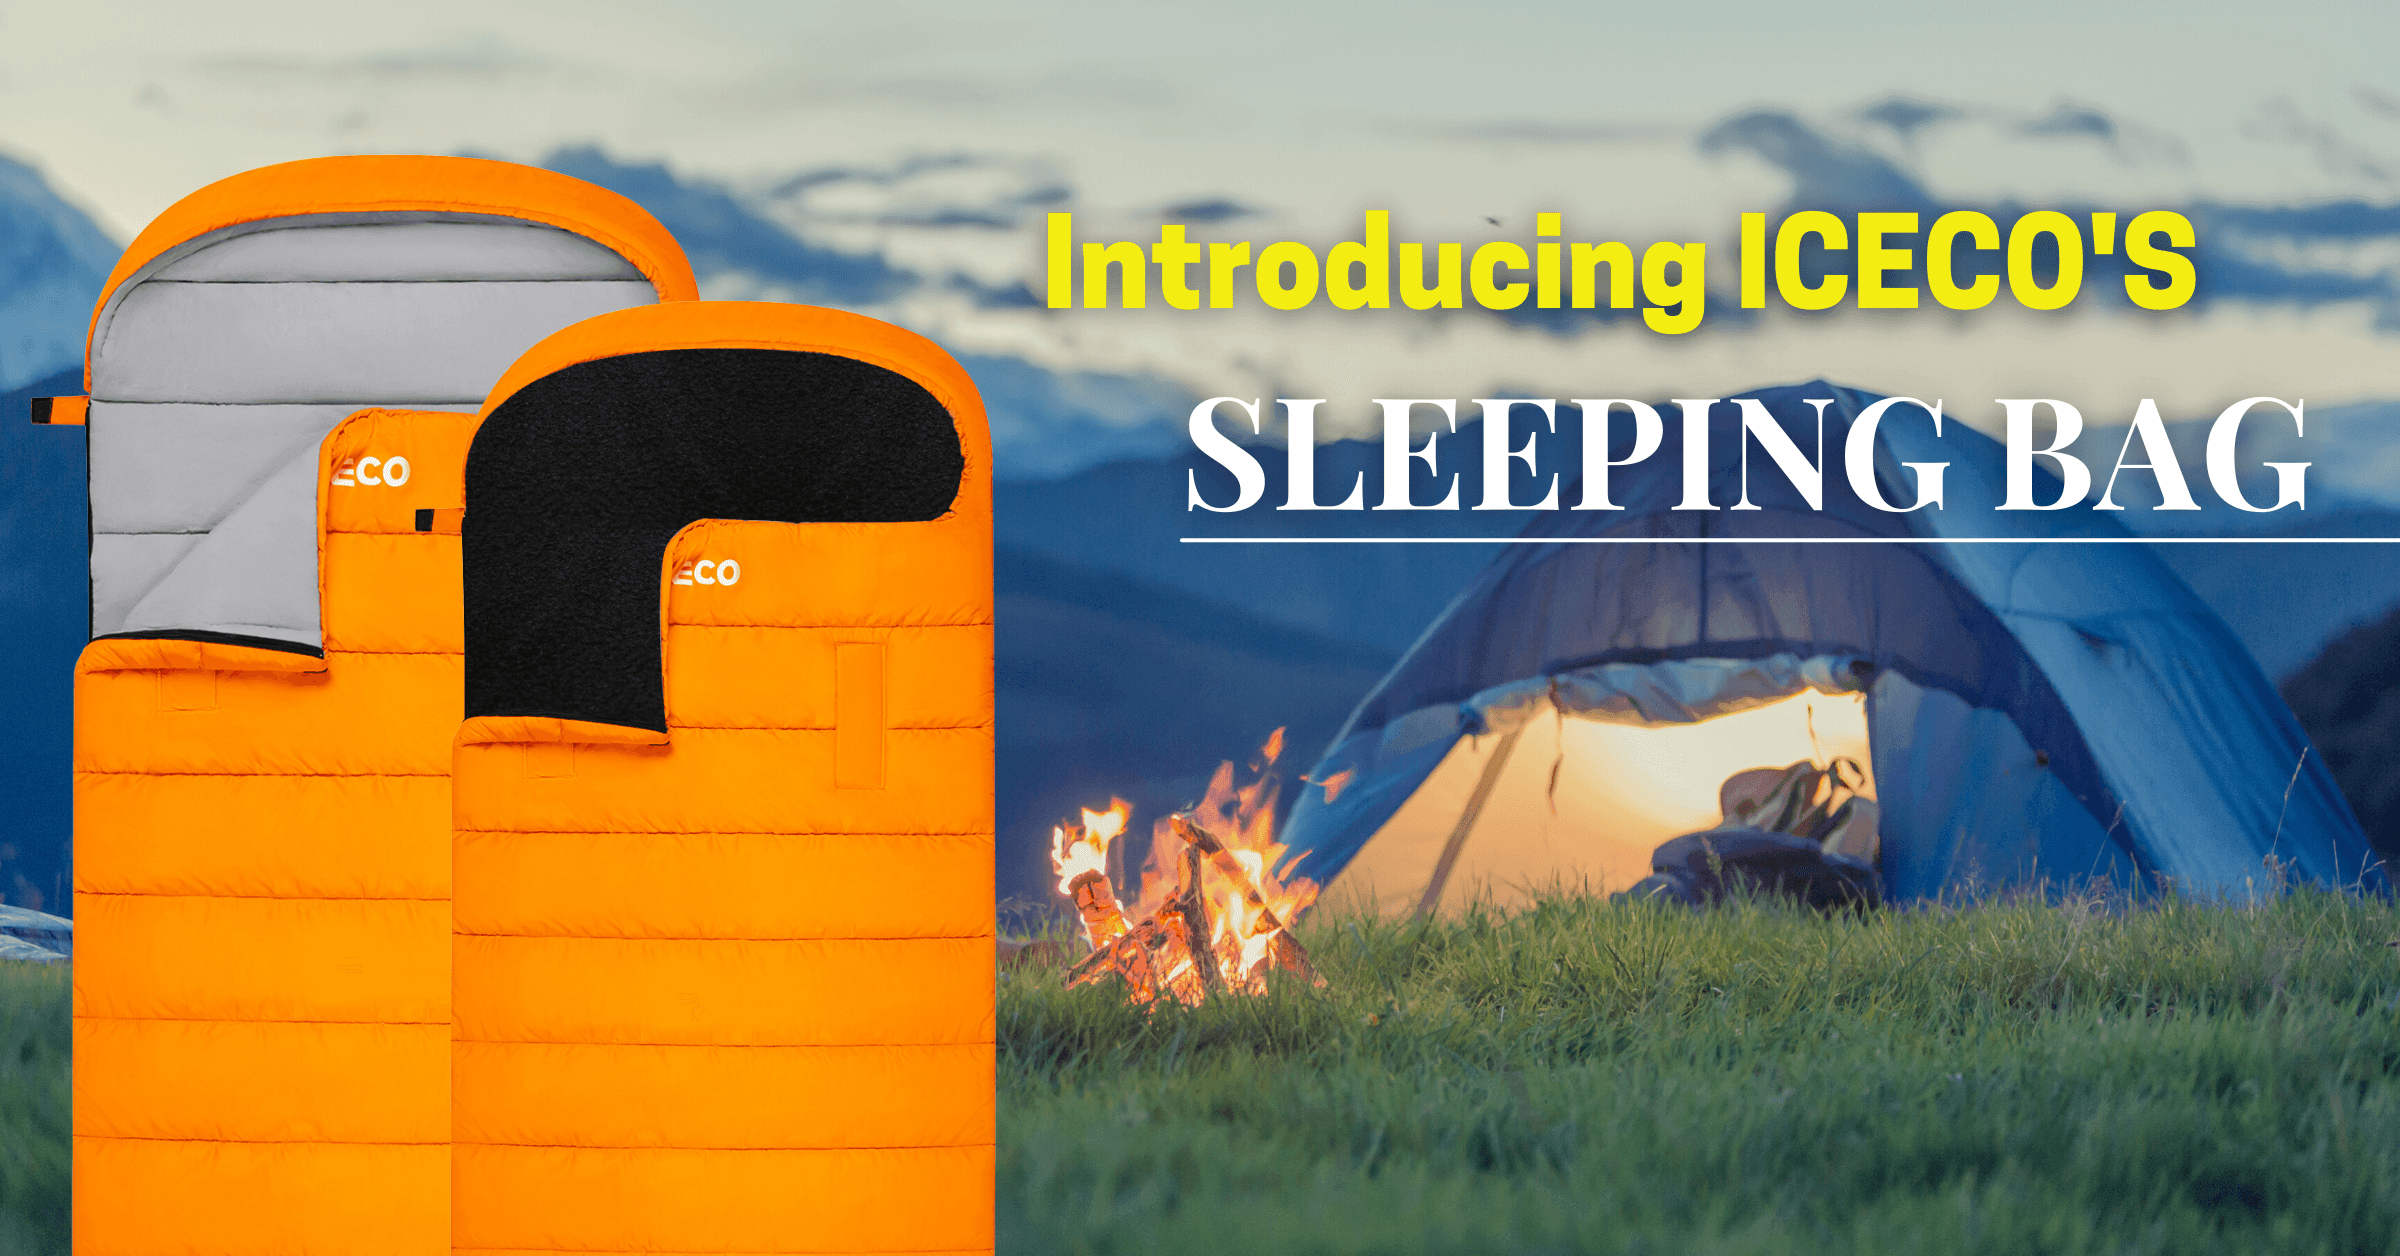 Introducing ICECO's Sleeping Bag - www.icecofreezer.com